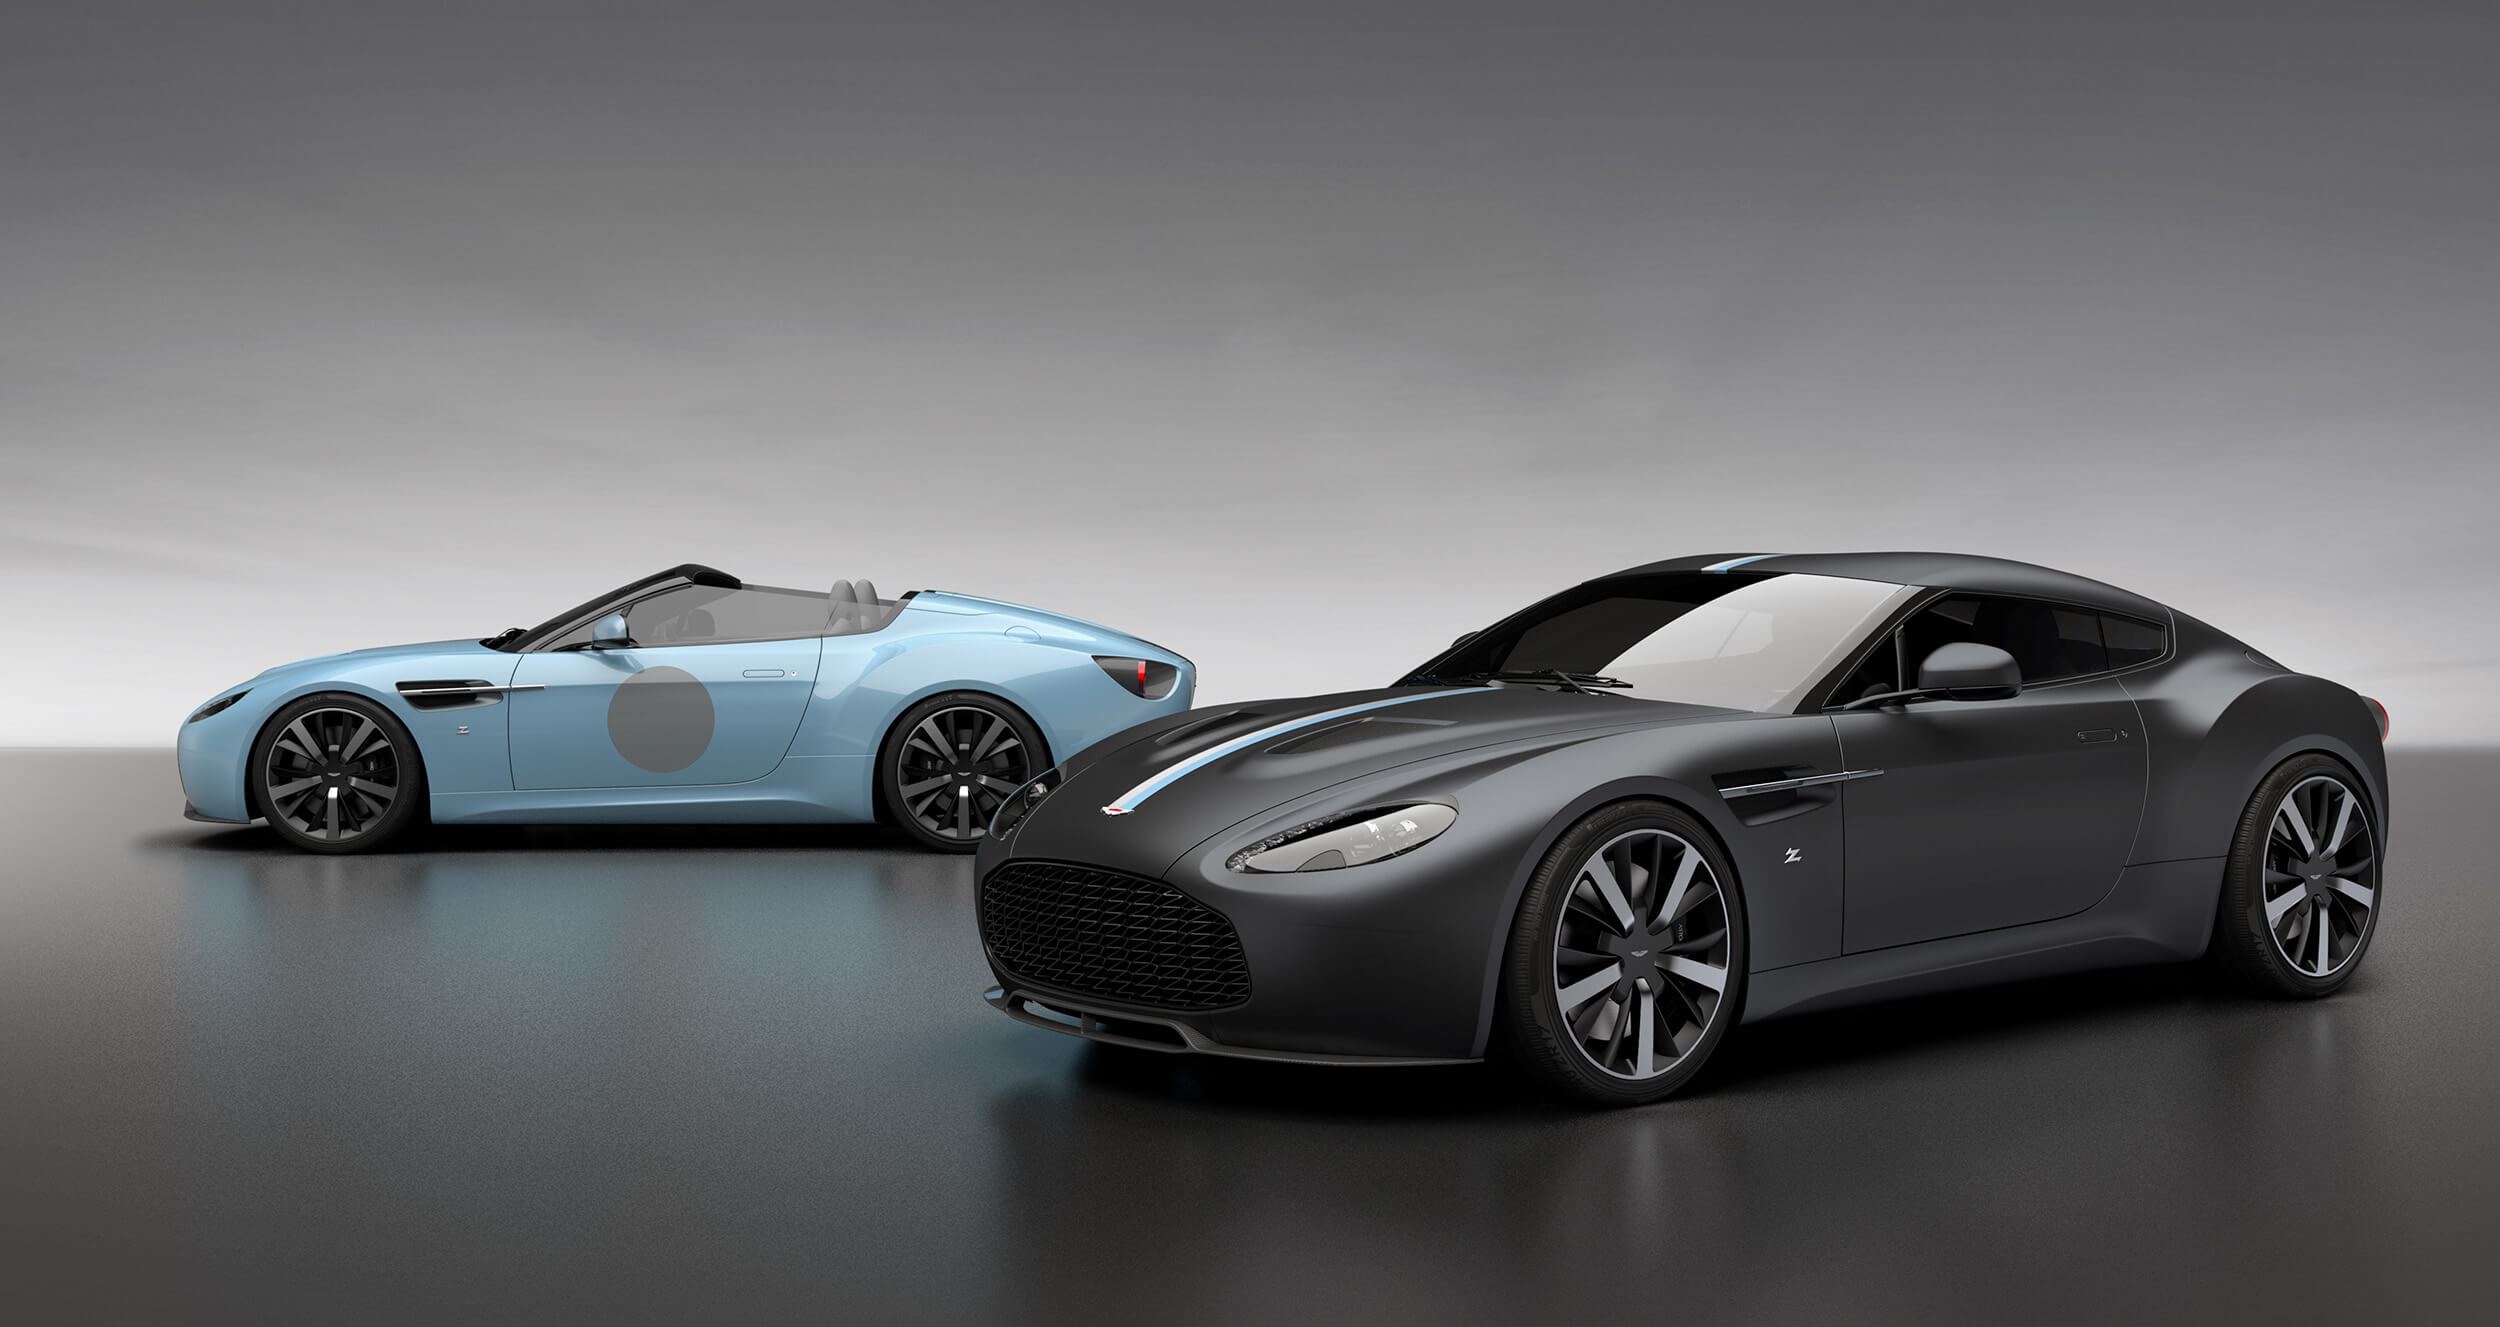 H Aston Martin Vantage V12 Zagato επιστρέφει σε Coupé και Speedster μορφή